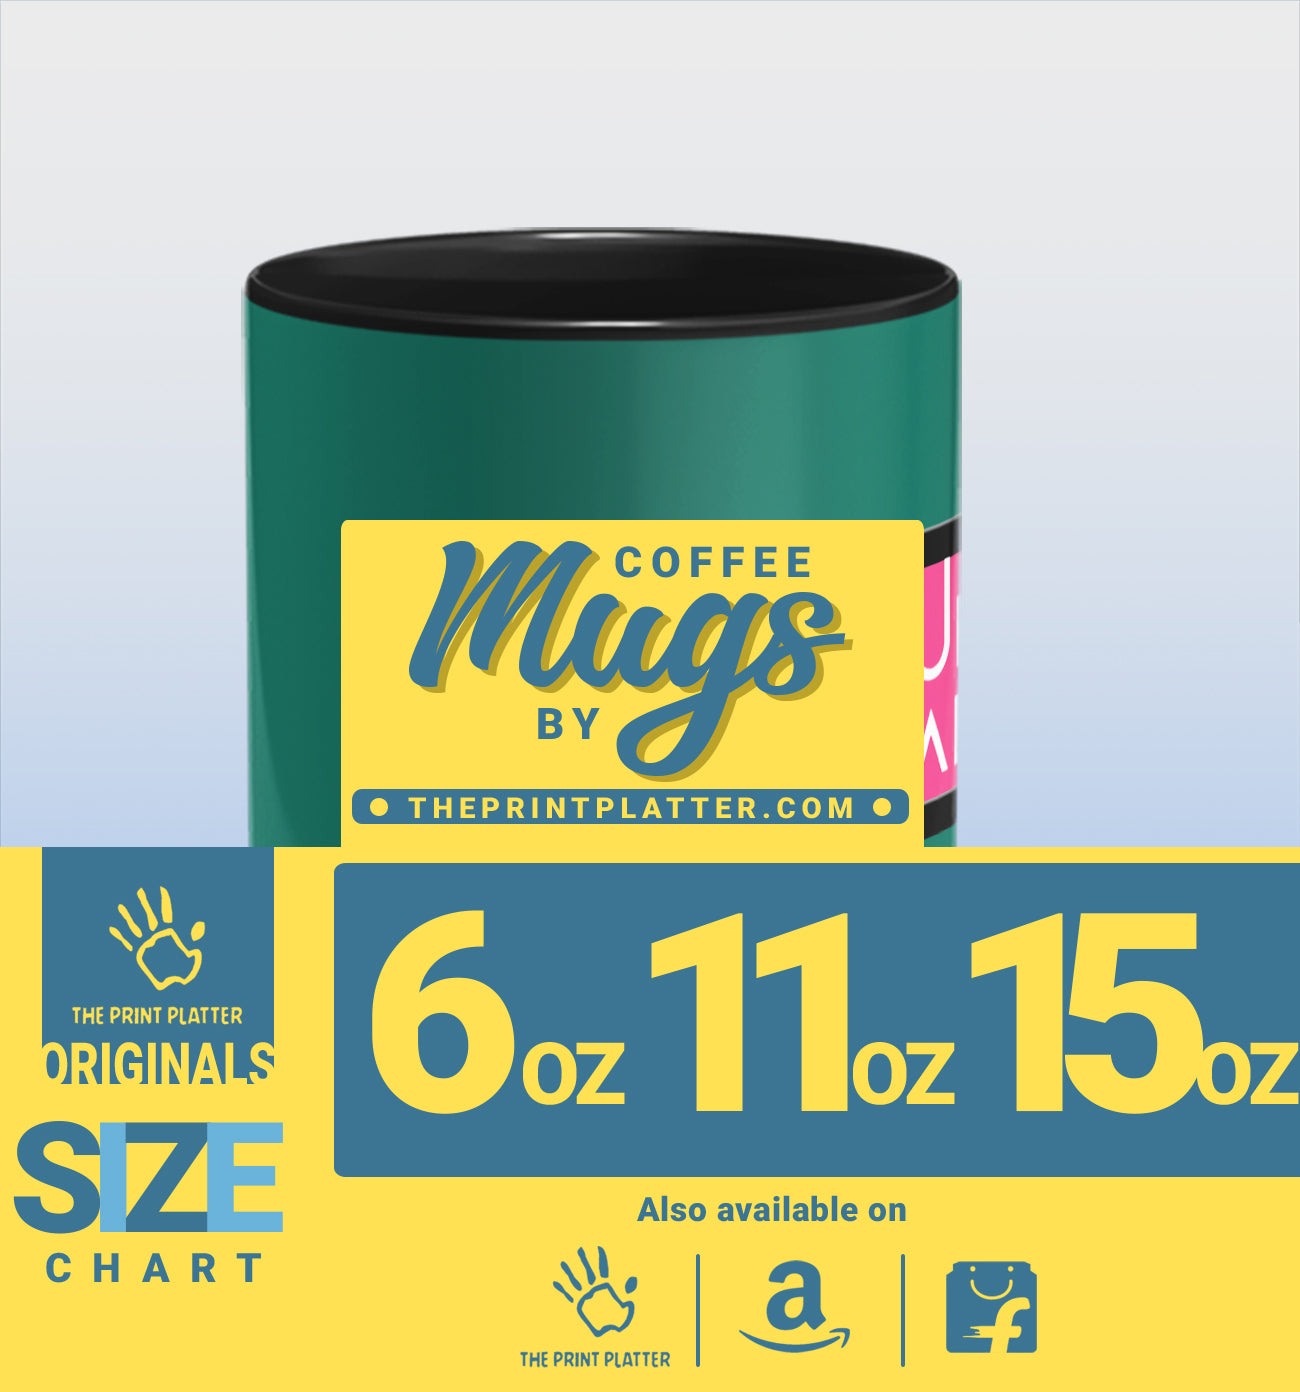 101 Squid Game Inside Black Cermic Coffee Mug 330 ml, Microwave & Dishwasher Safe| CM-R179